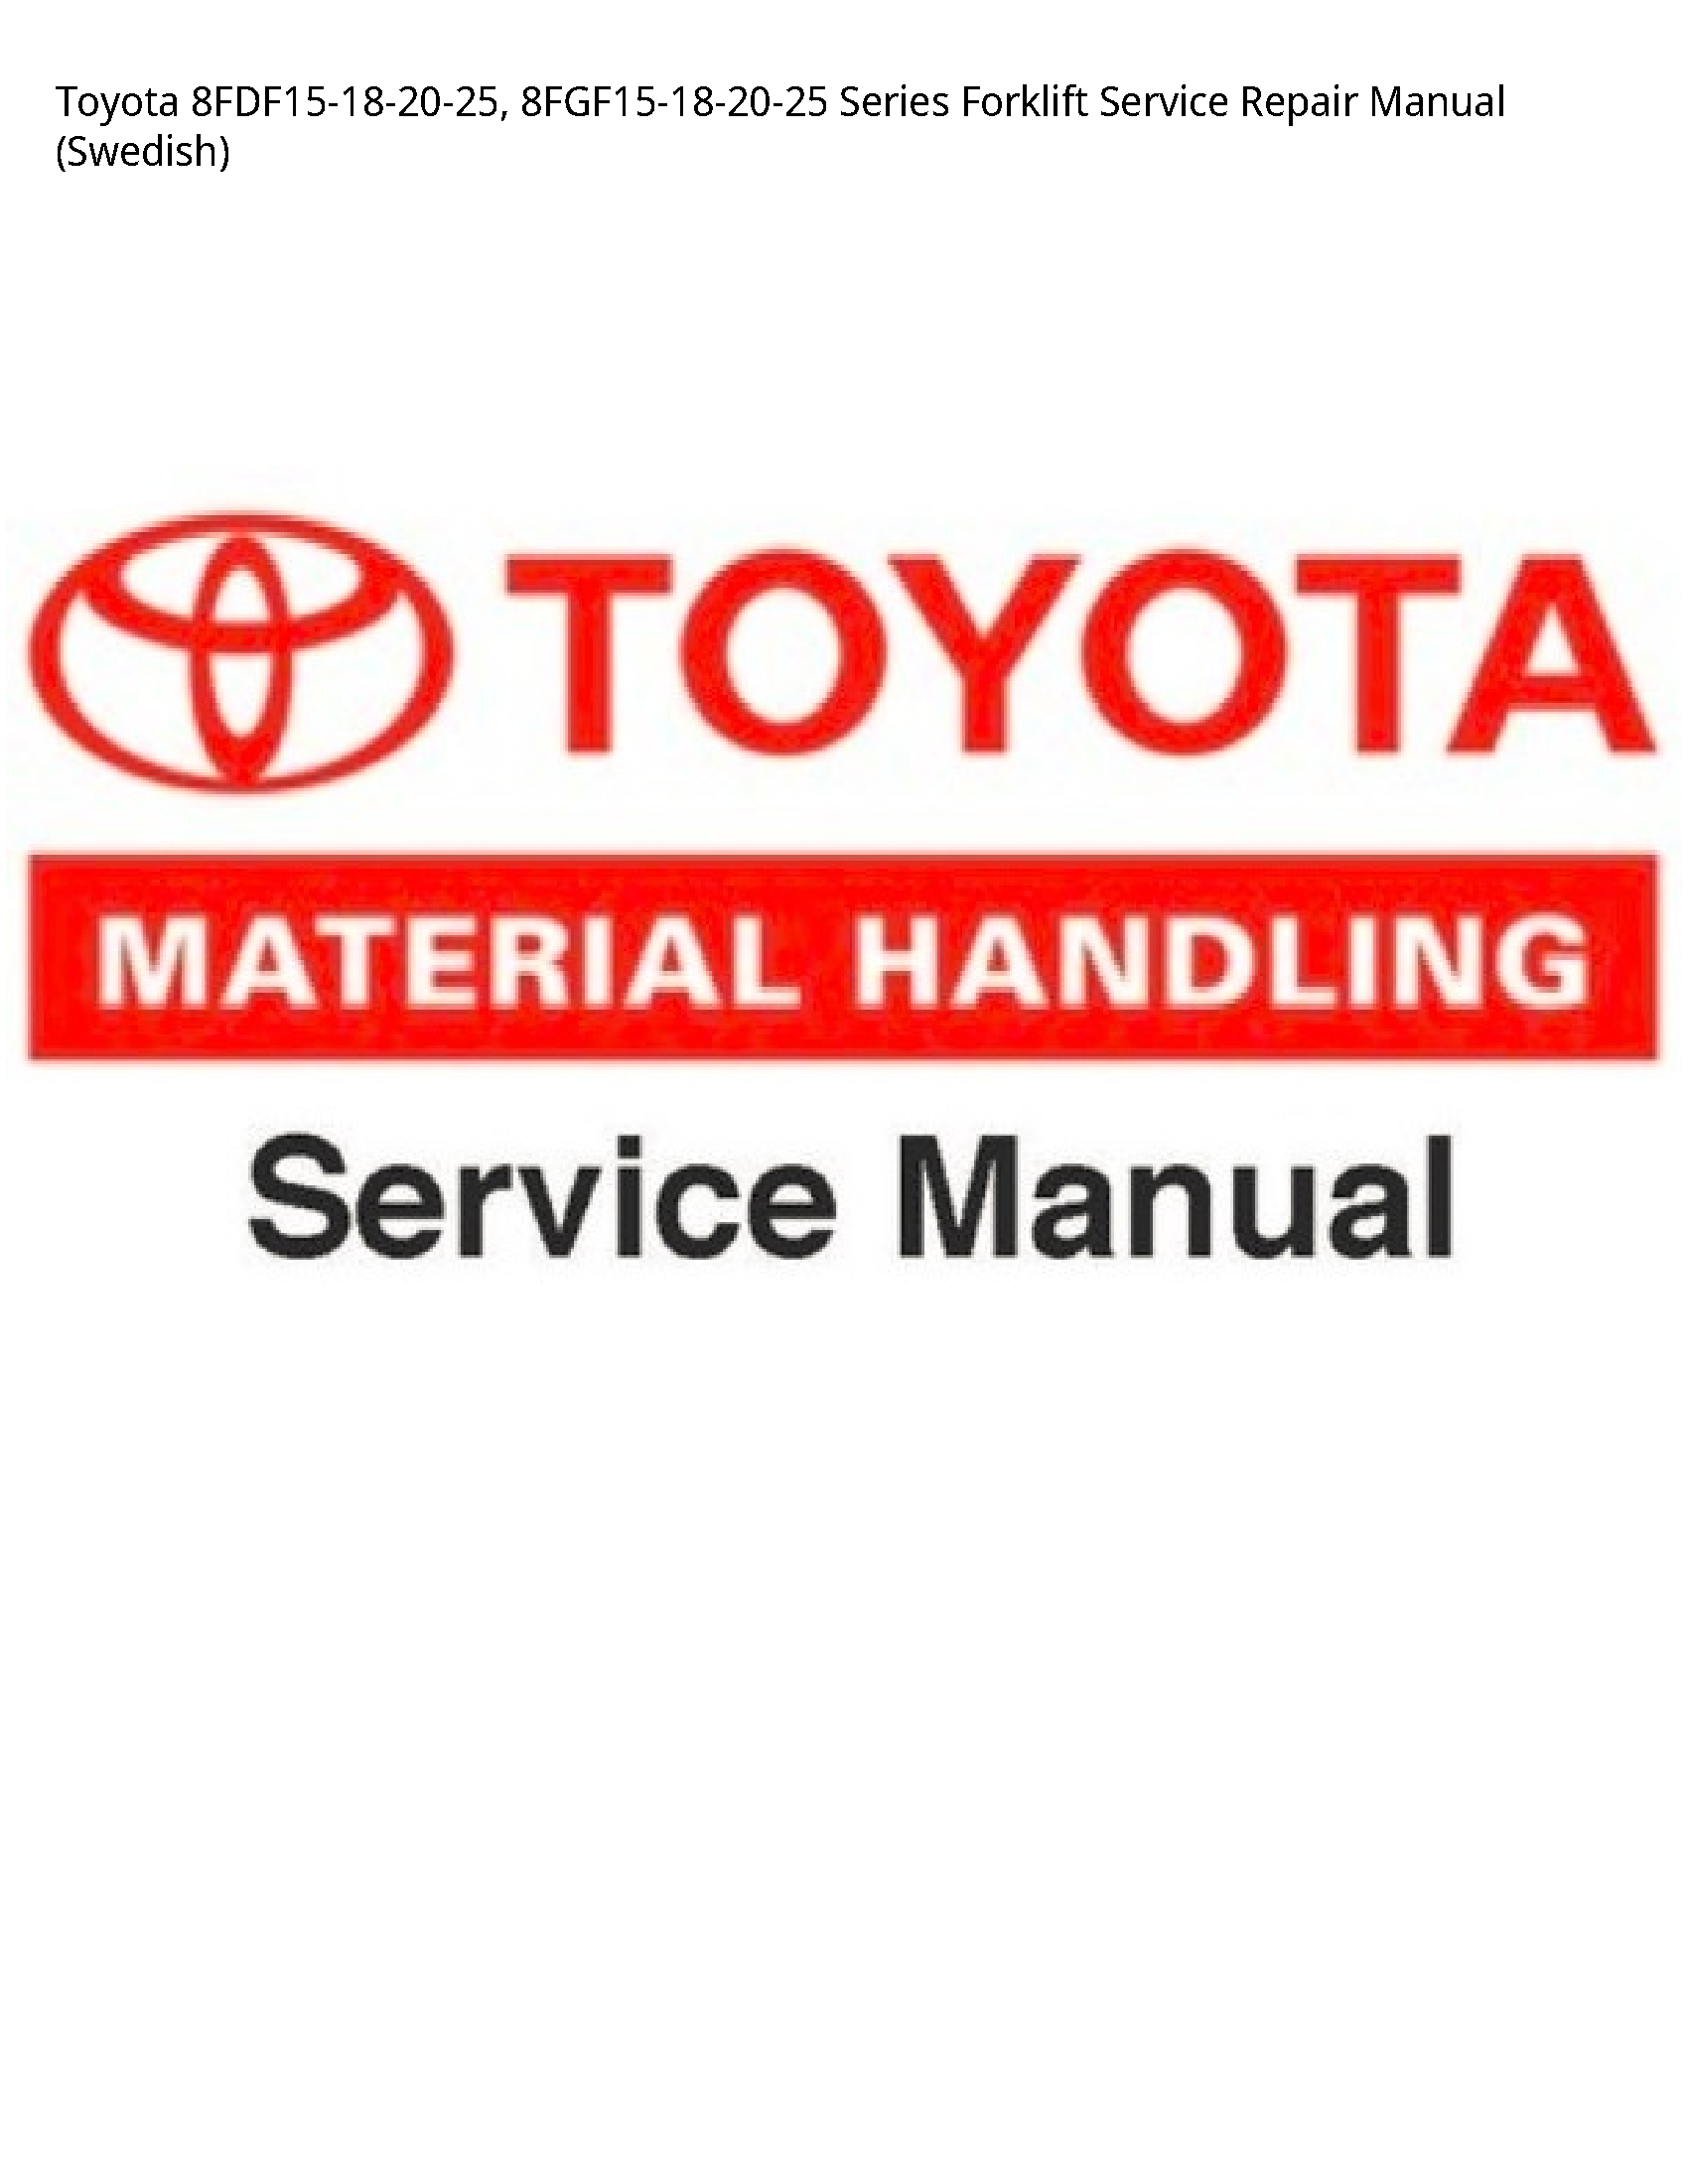 Toyota 8FDF15-18-20-25 Series Forklift manual